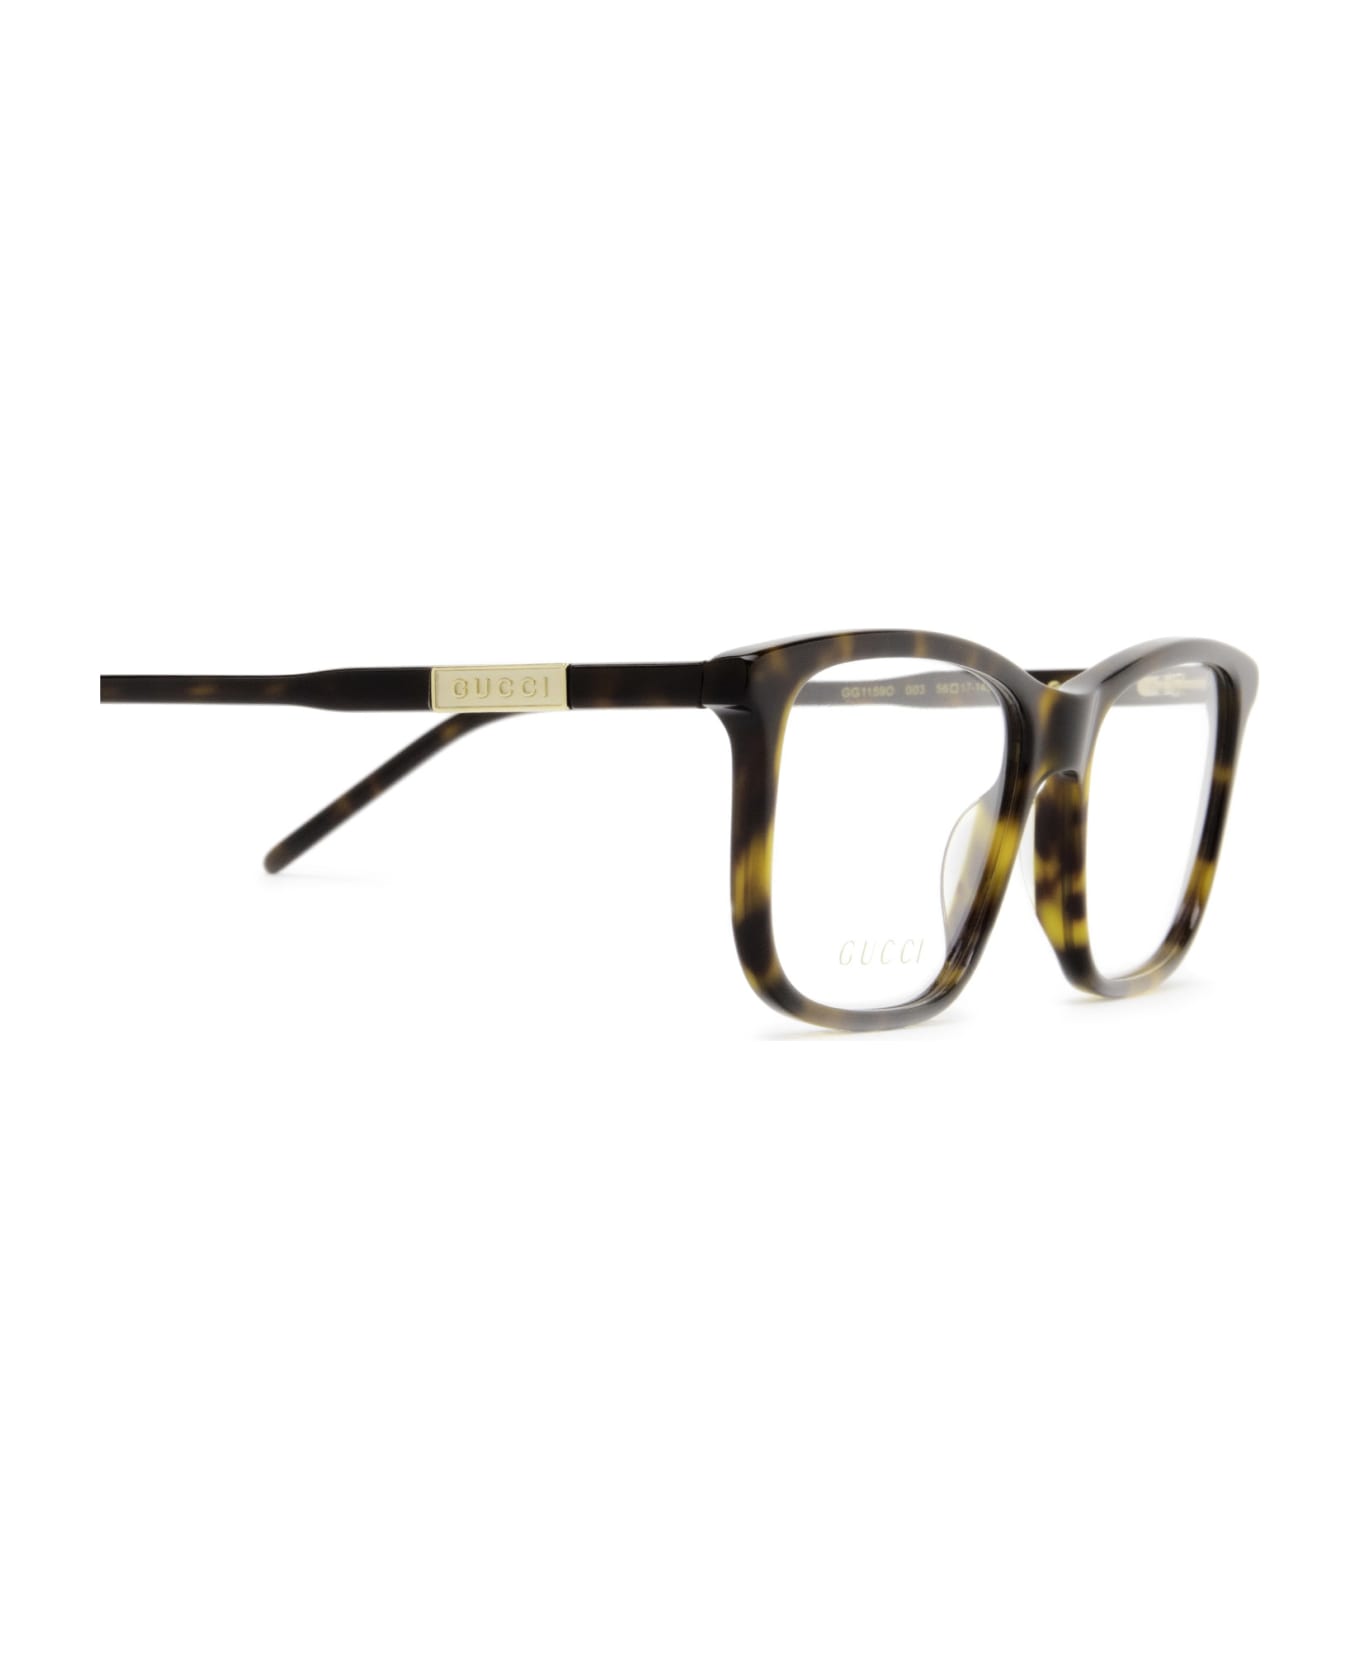 Gucci Eyewear Gg1159o Havana Glasses - Havana アイウェア